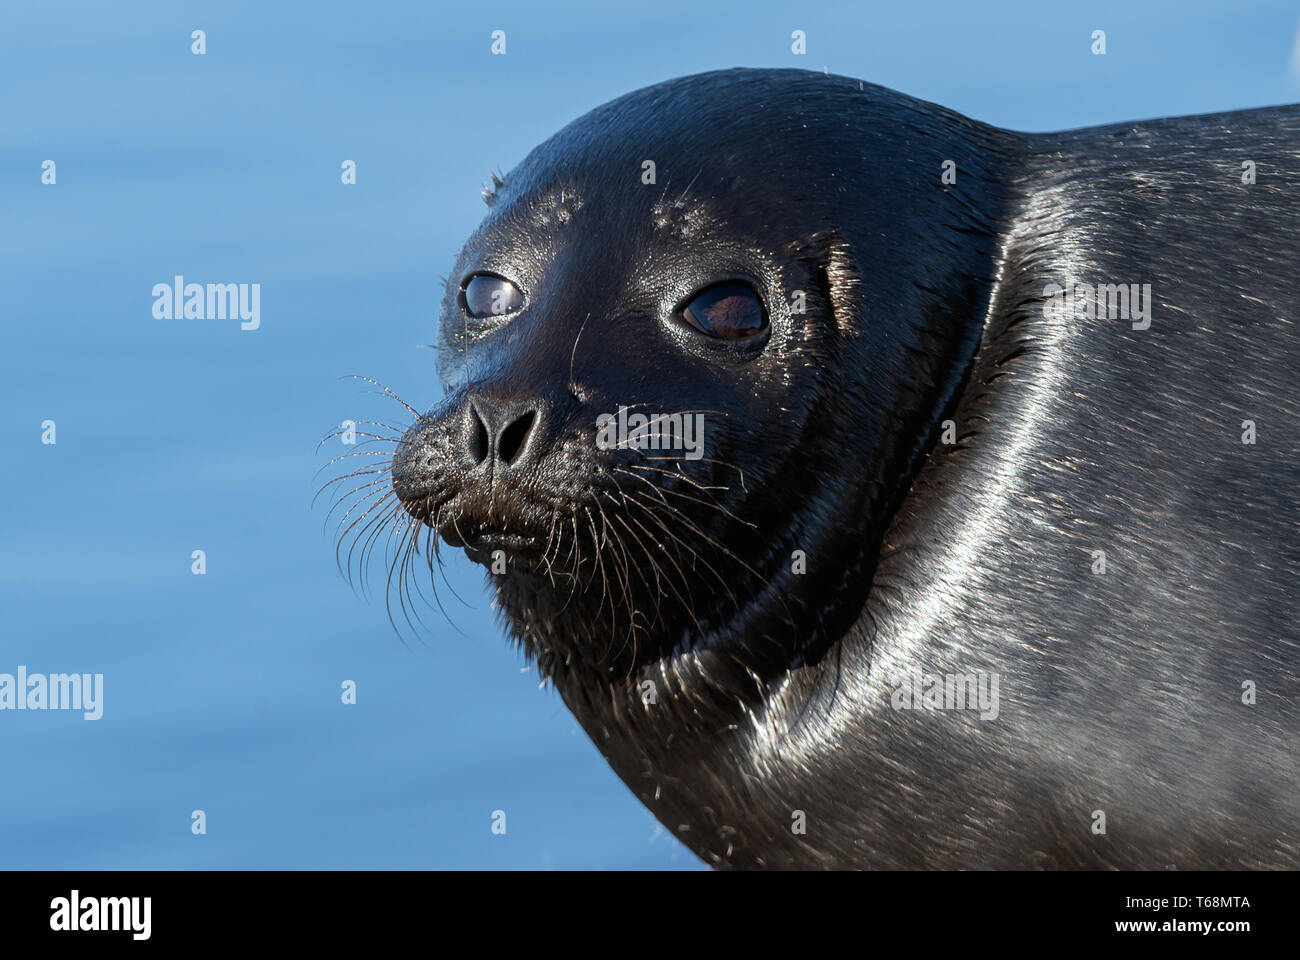 The Ladoga ringed seal.  Closeup portrait. Scientific name: Pusa hispida ladogensis. The Ladoga seal in a natural habitat. Ladoga Lake. Russia Stock Photo